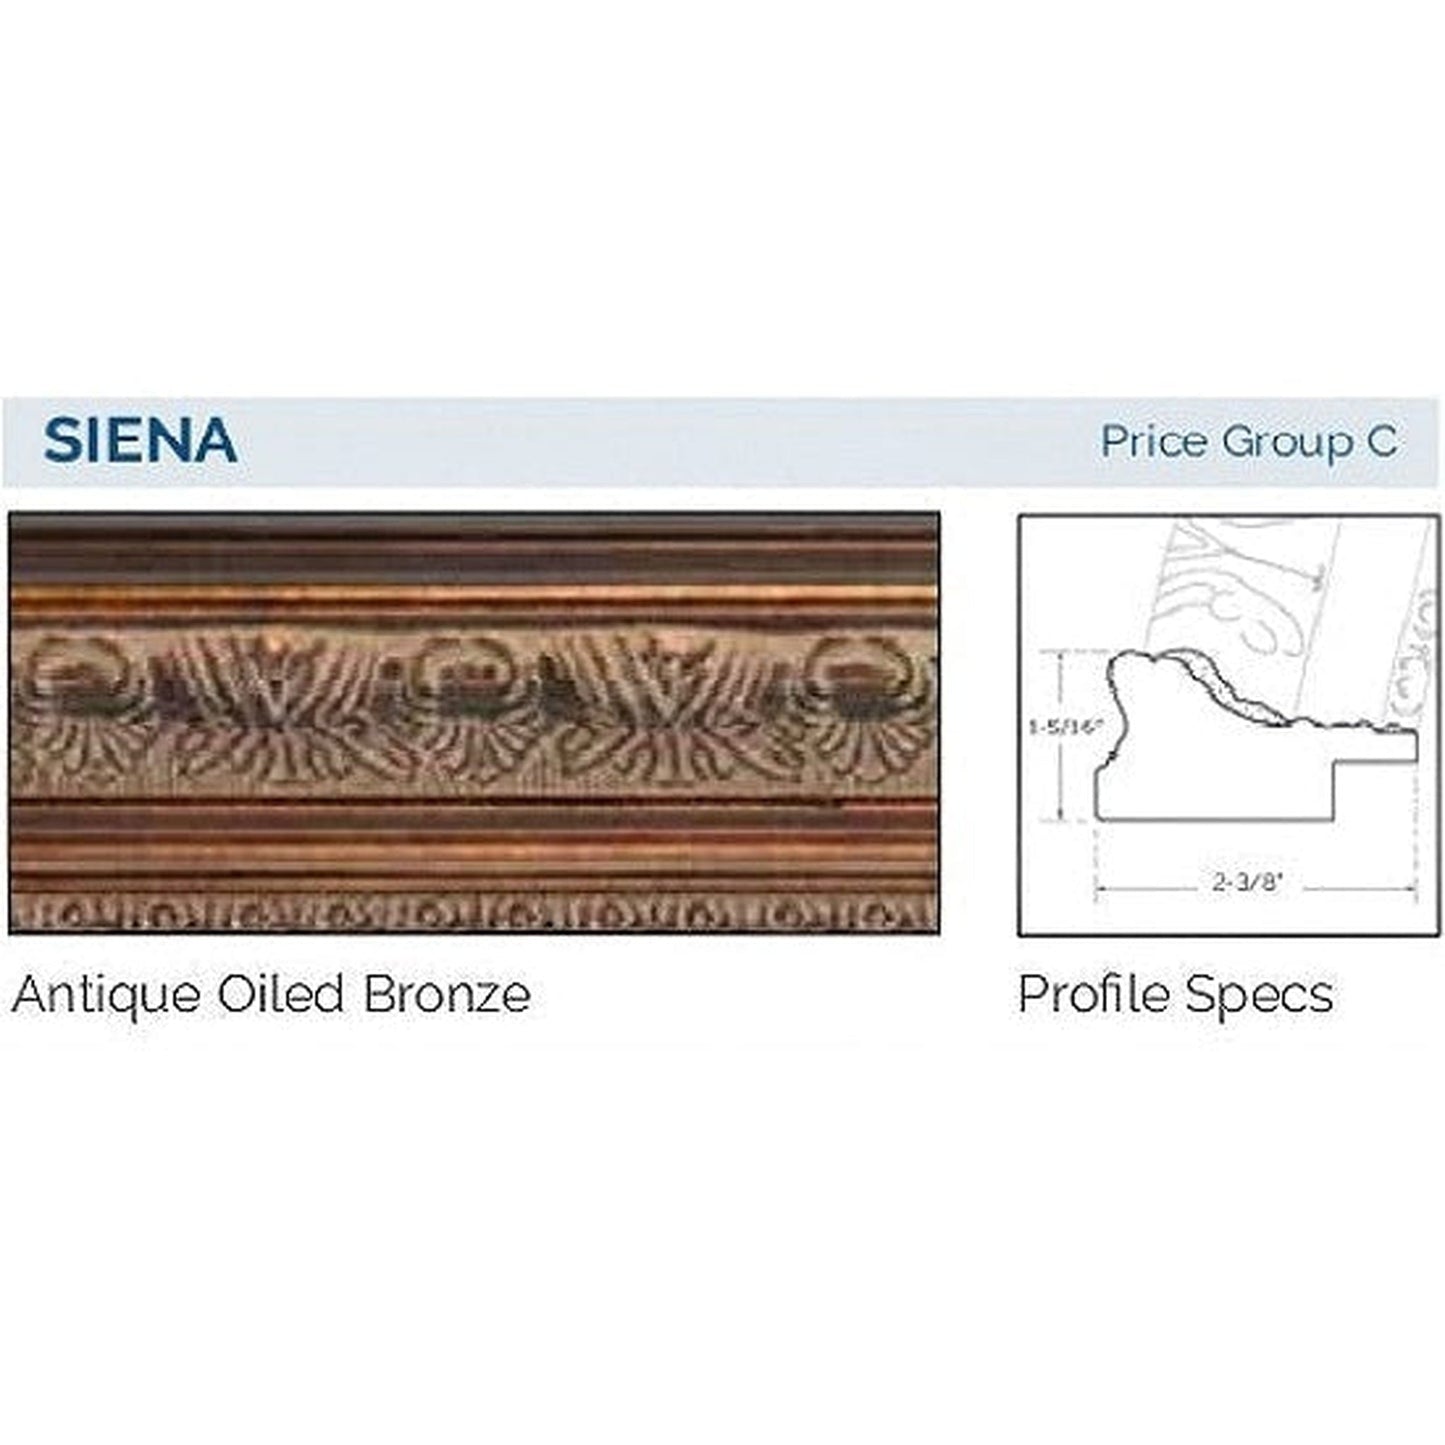 Afina Signature 27" x 21" Siena Antique Oiled Bronze Recessed Retro-Fit Double Door Medicine Cabinet With Beveled Edge Mirror